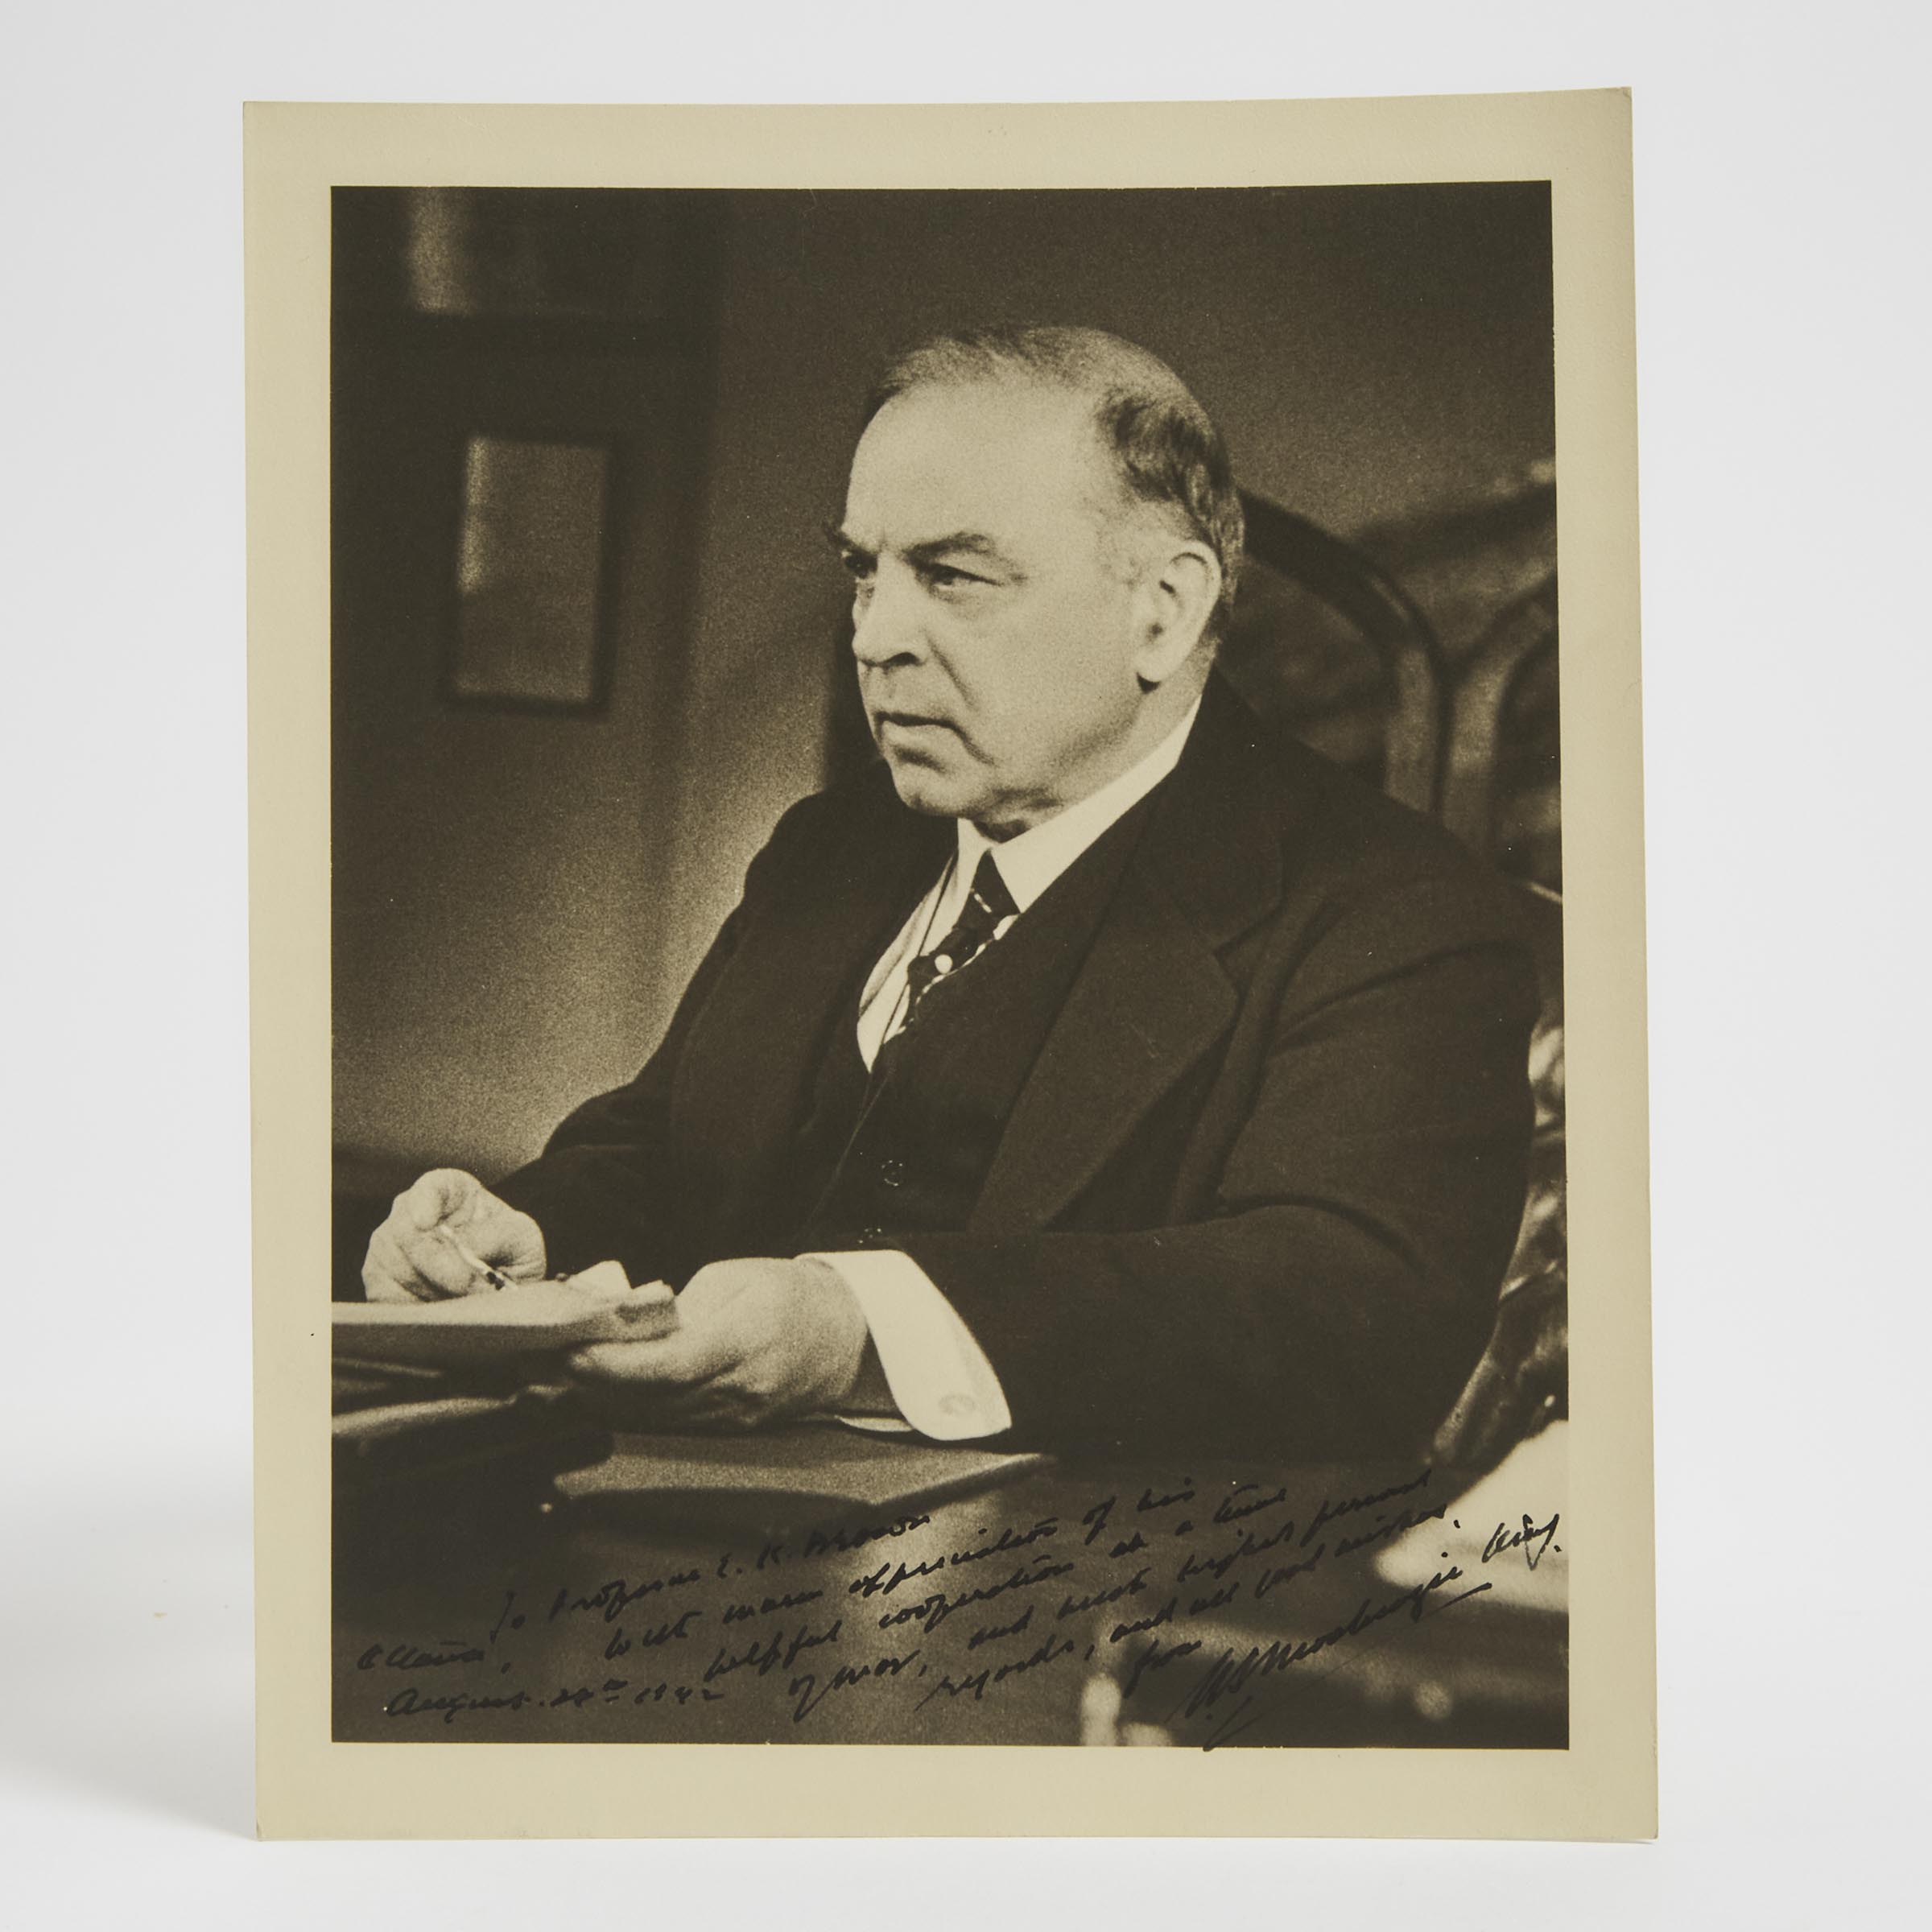 William Lyon Mackenzie King Signed Portrait Photograph, c.1942